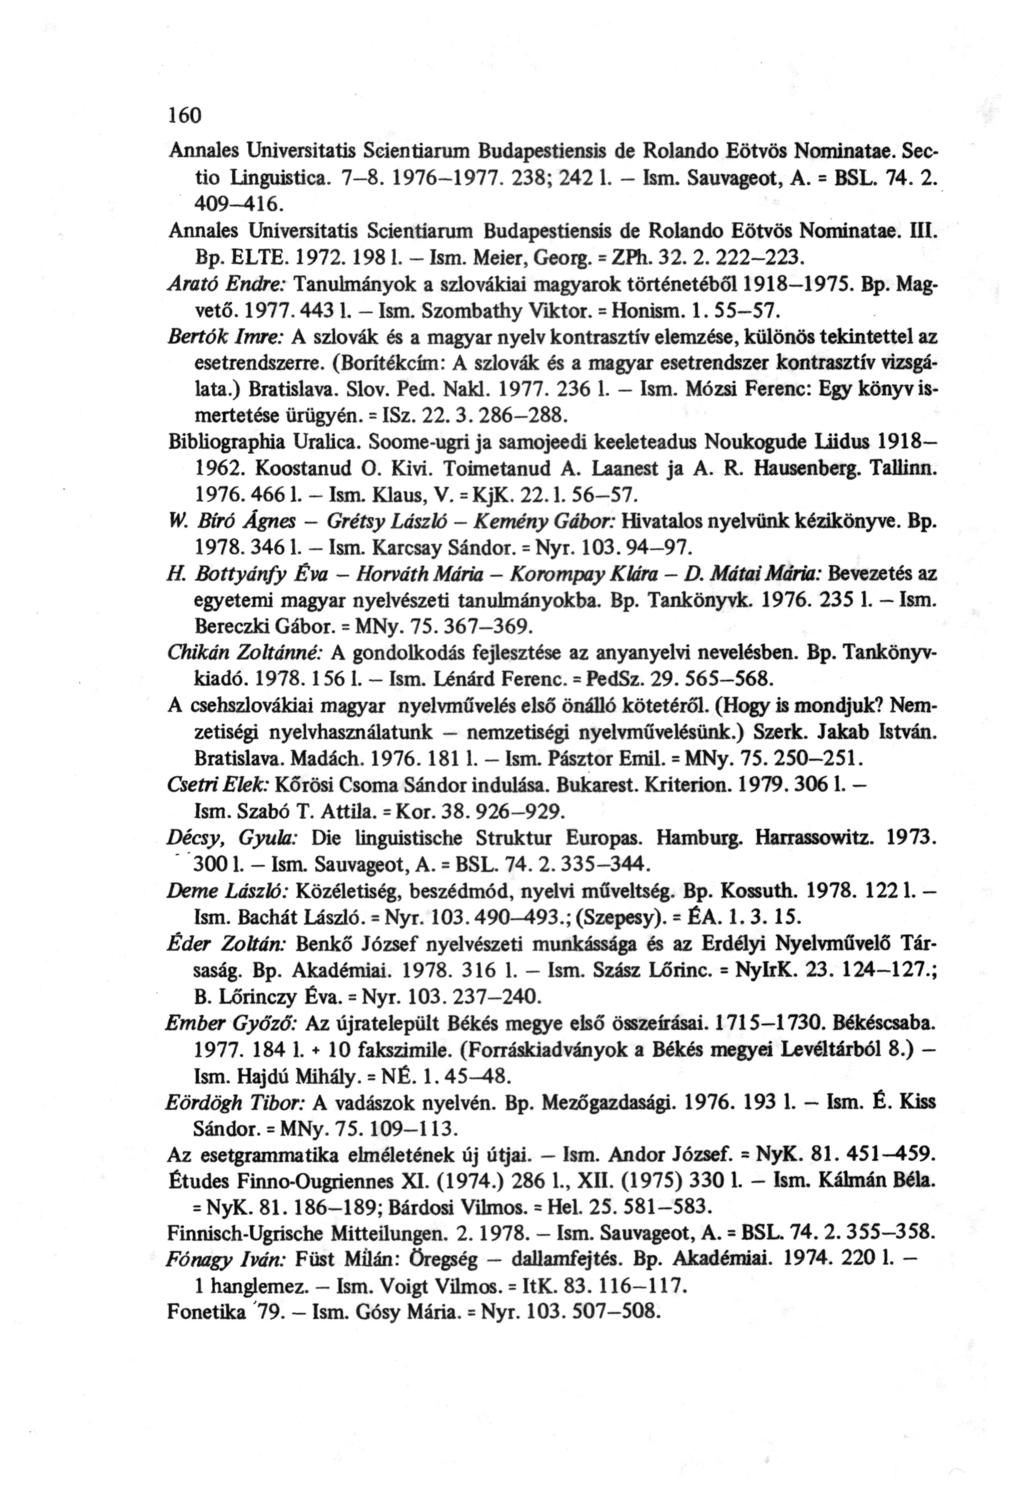 160 Annales Universitatis Seientiarum Budapestiensis de Rolando Eötvös Nominatae. Sectio Iinguistica. 7-8. 1976-1977. 238; 242 1. - Ism. Sauvageot, A. = BSL. 74. 2. 409-416.